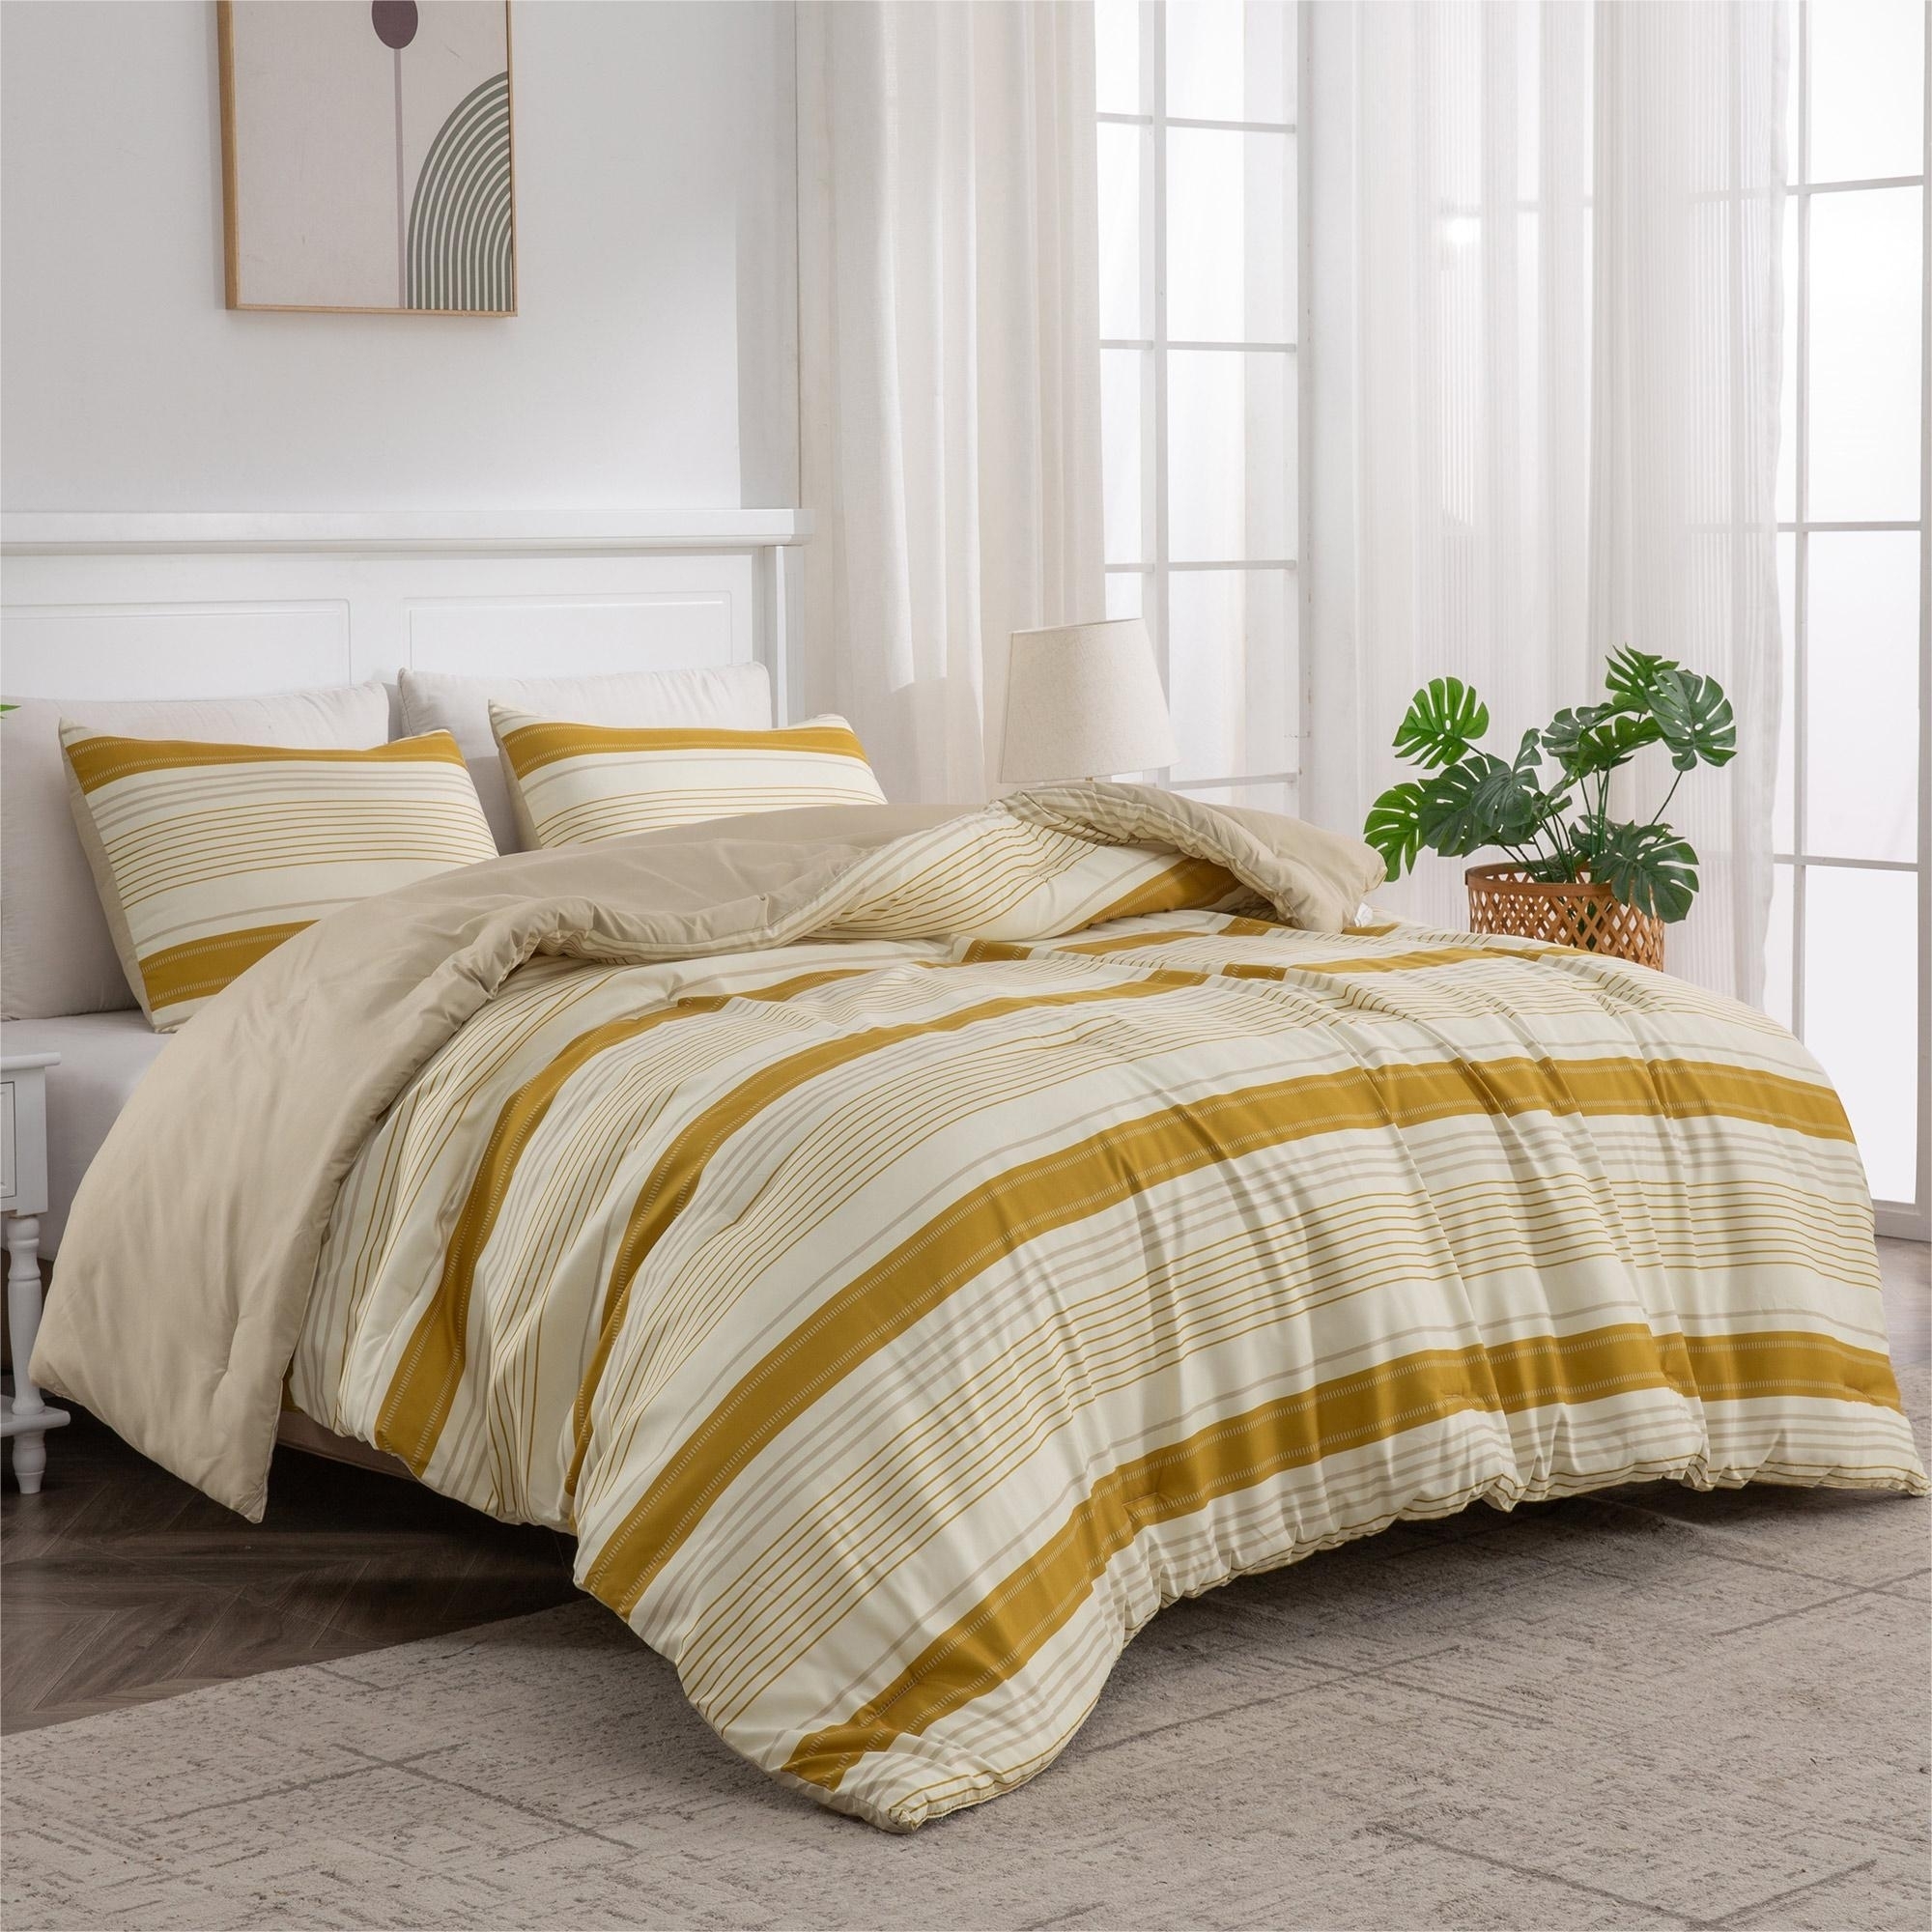 Printed Stripe Microfiber Comforter Set - All-Season Warmth, Yellow - Full/Queen